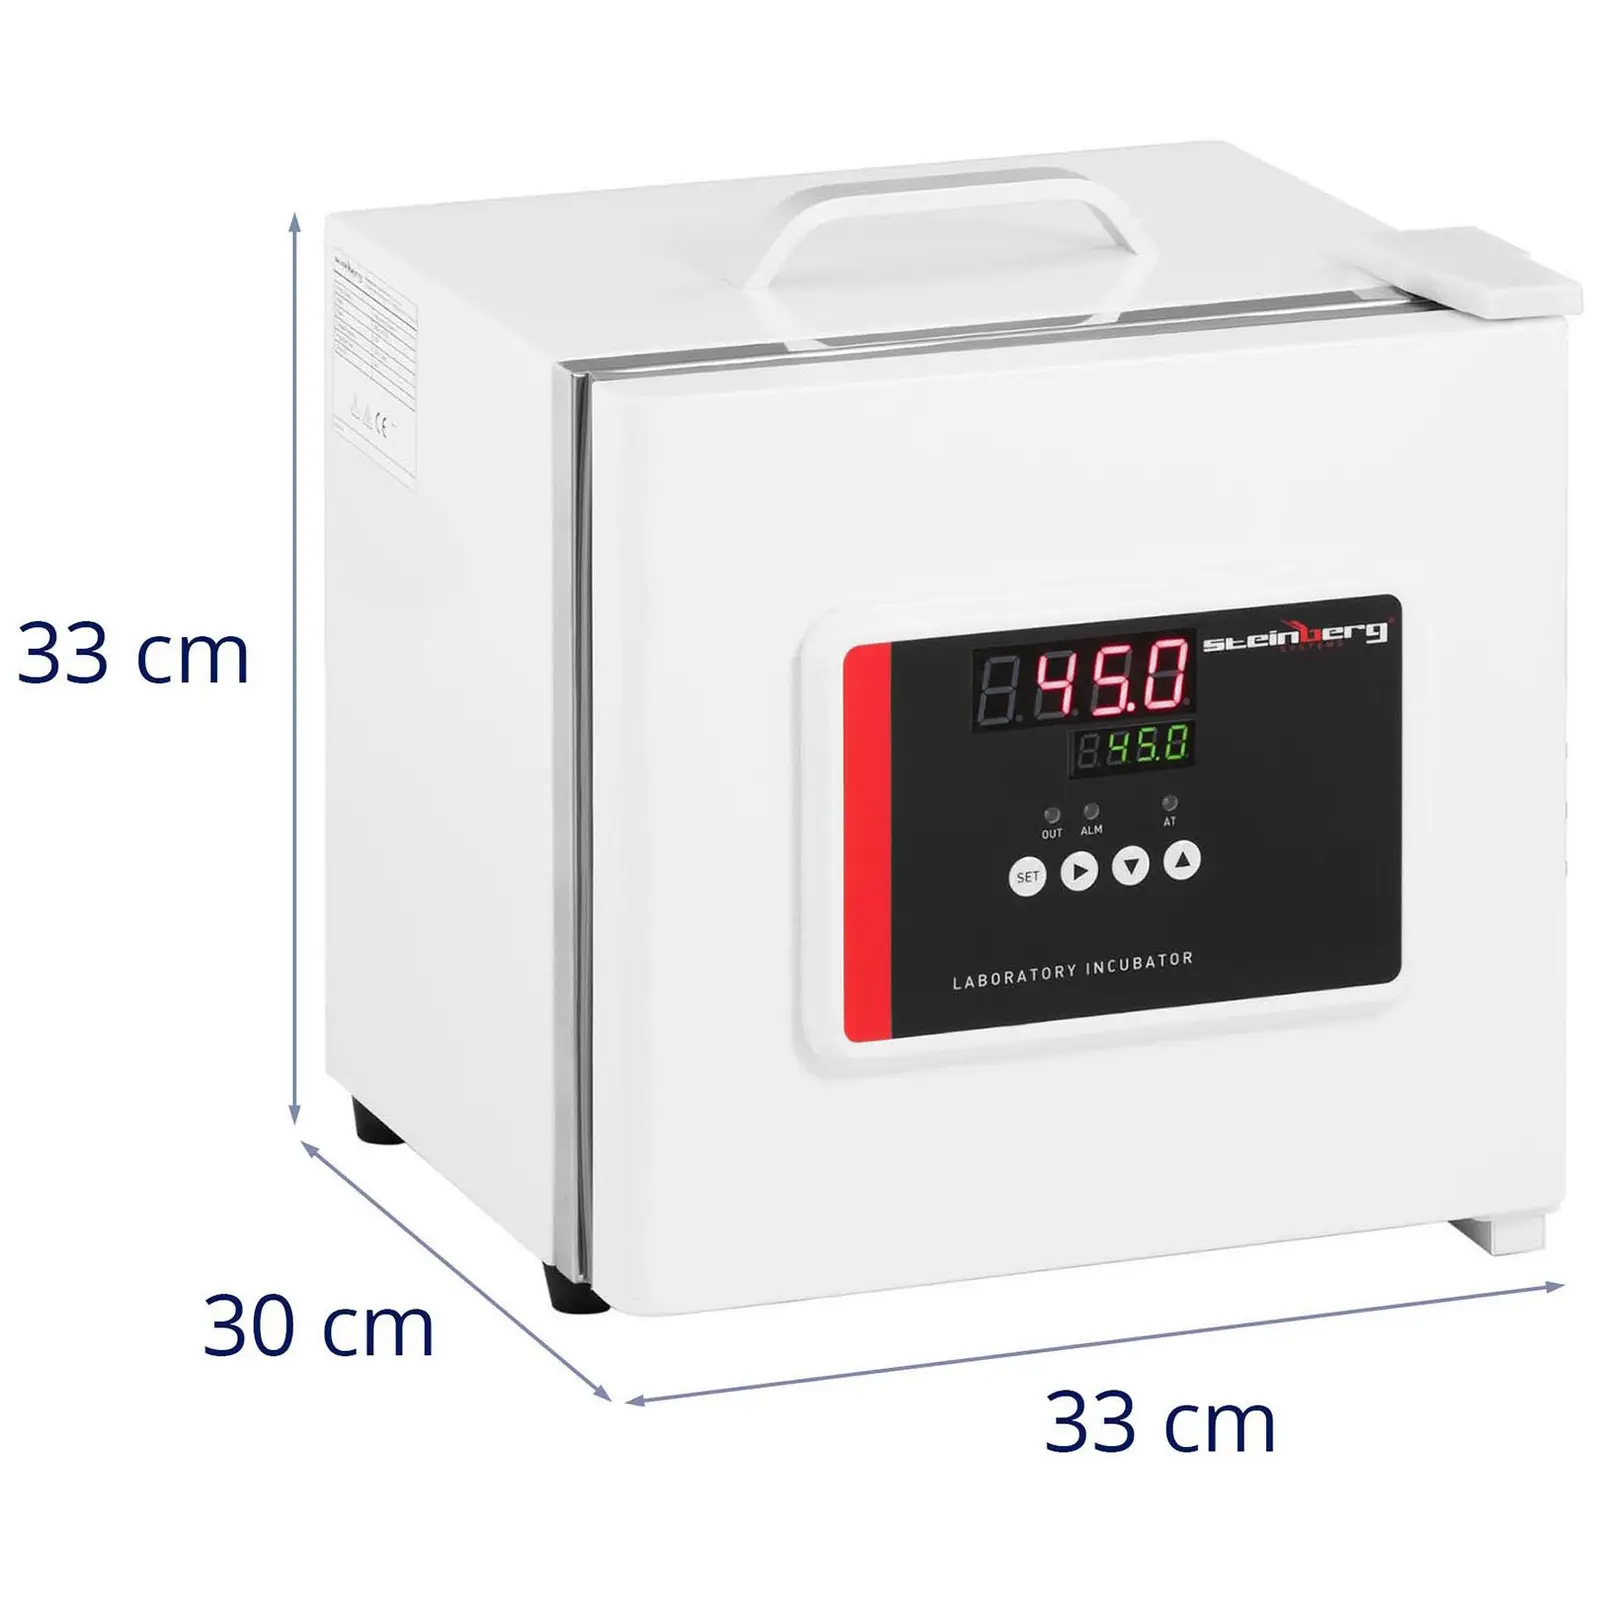 Incubadora de laboratorio - hasta 45 °C - 7,5 L - 12 V DC